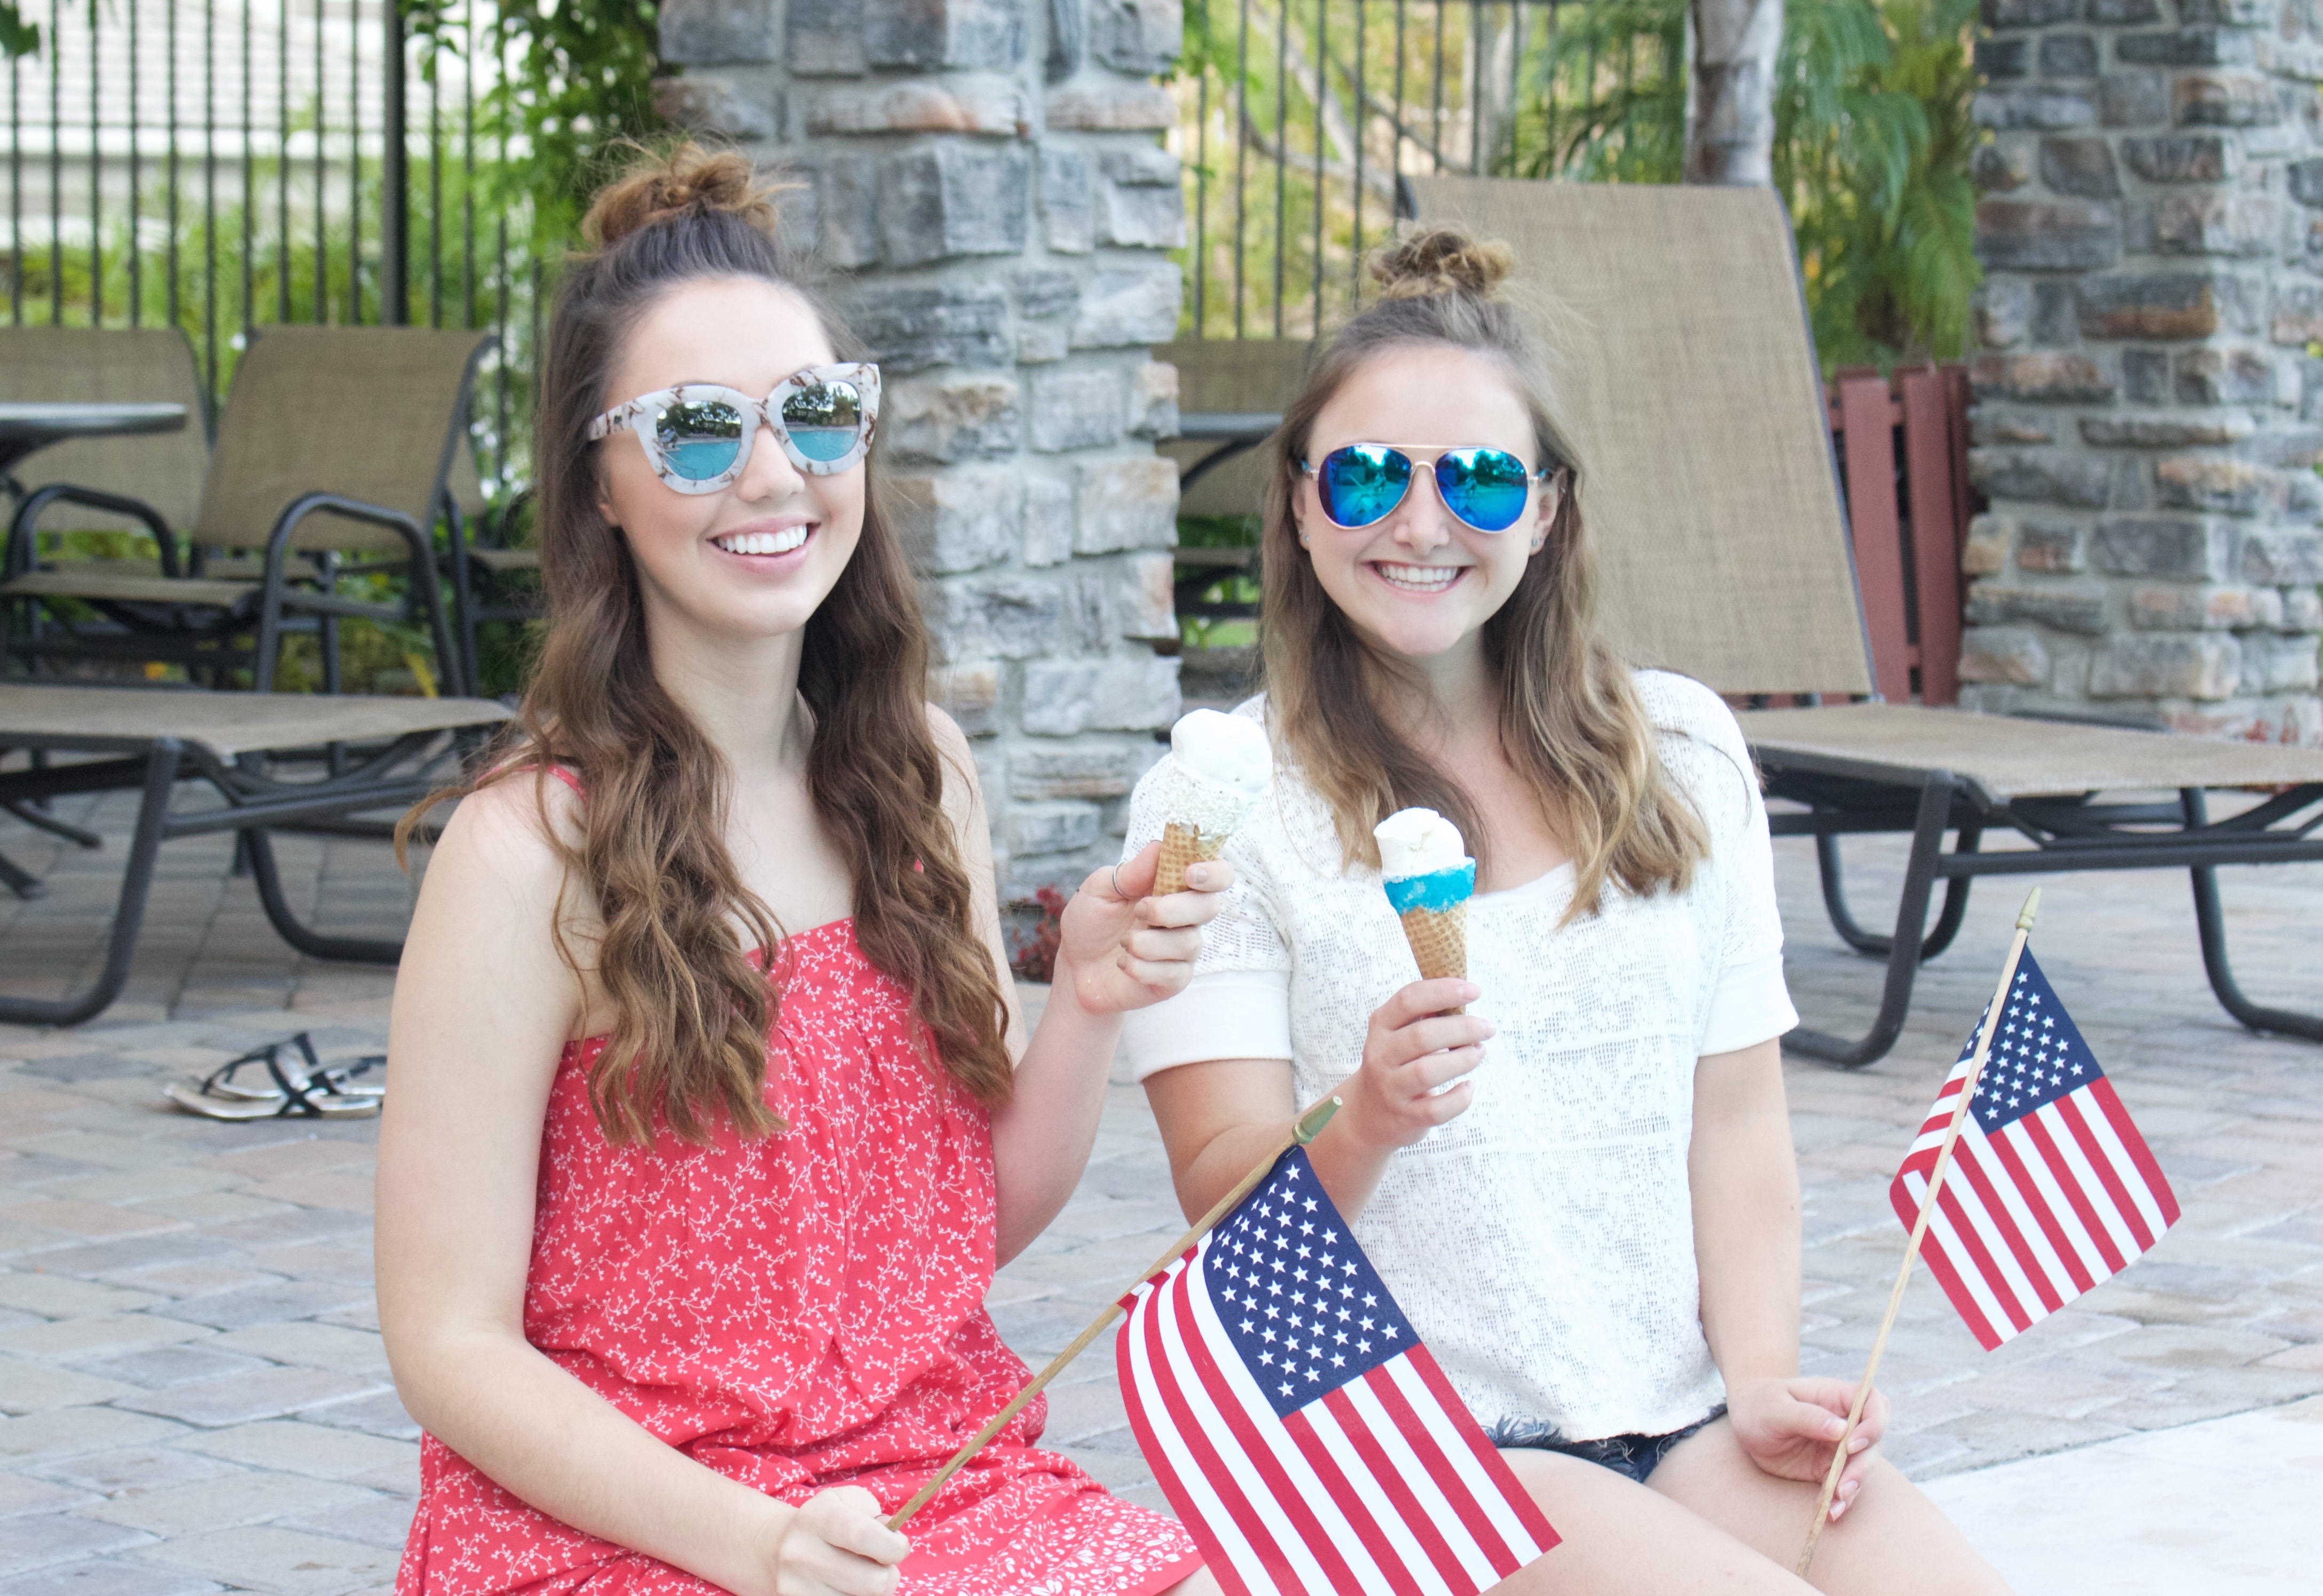 4th of july treat - ice cream cones